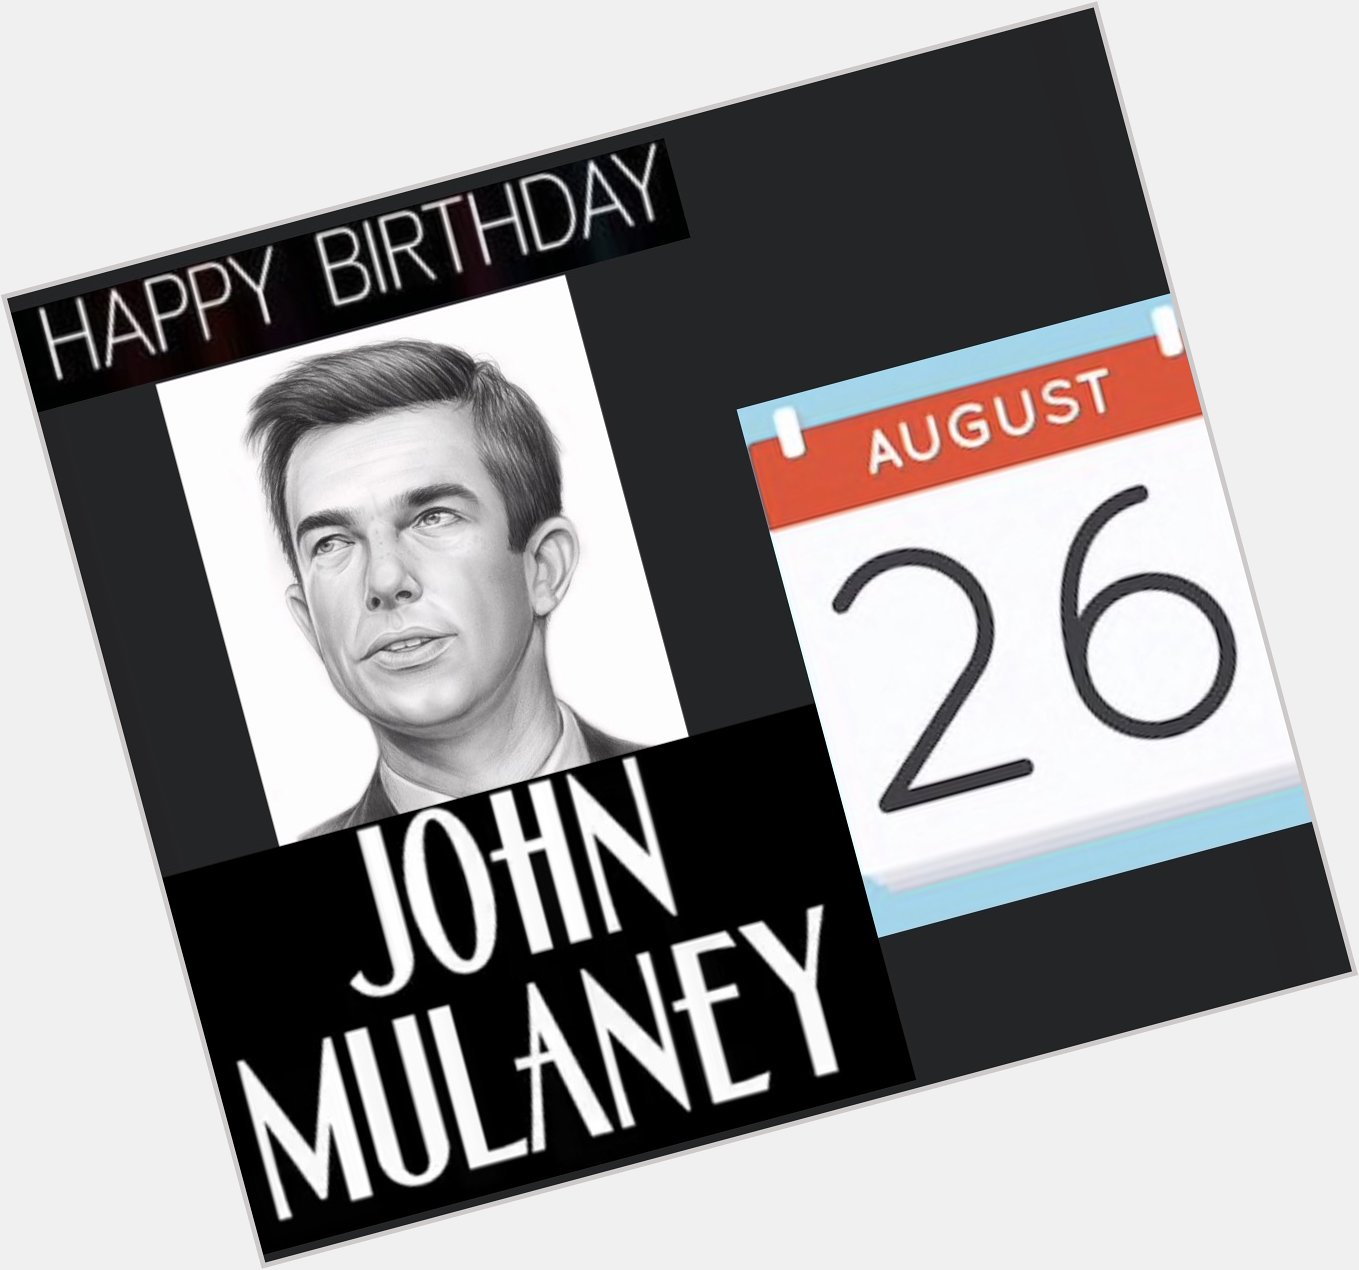 Happy birthday John Mulaney born August 26, 1982 